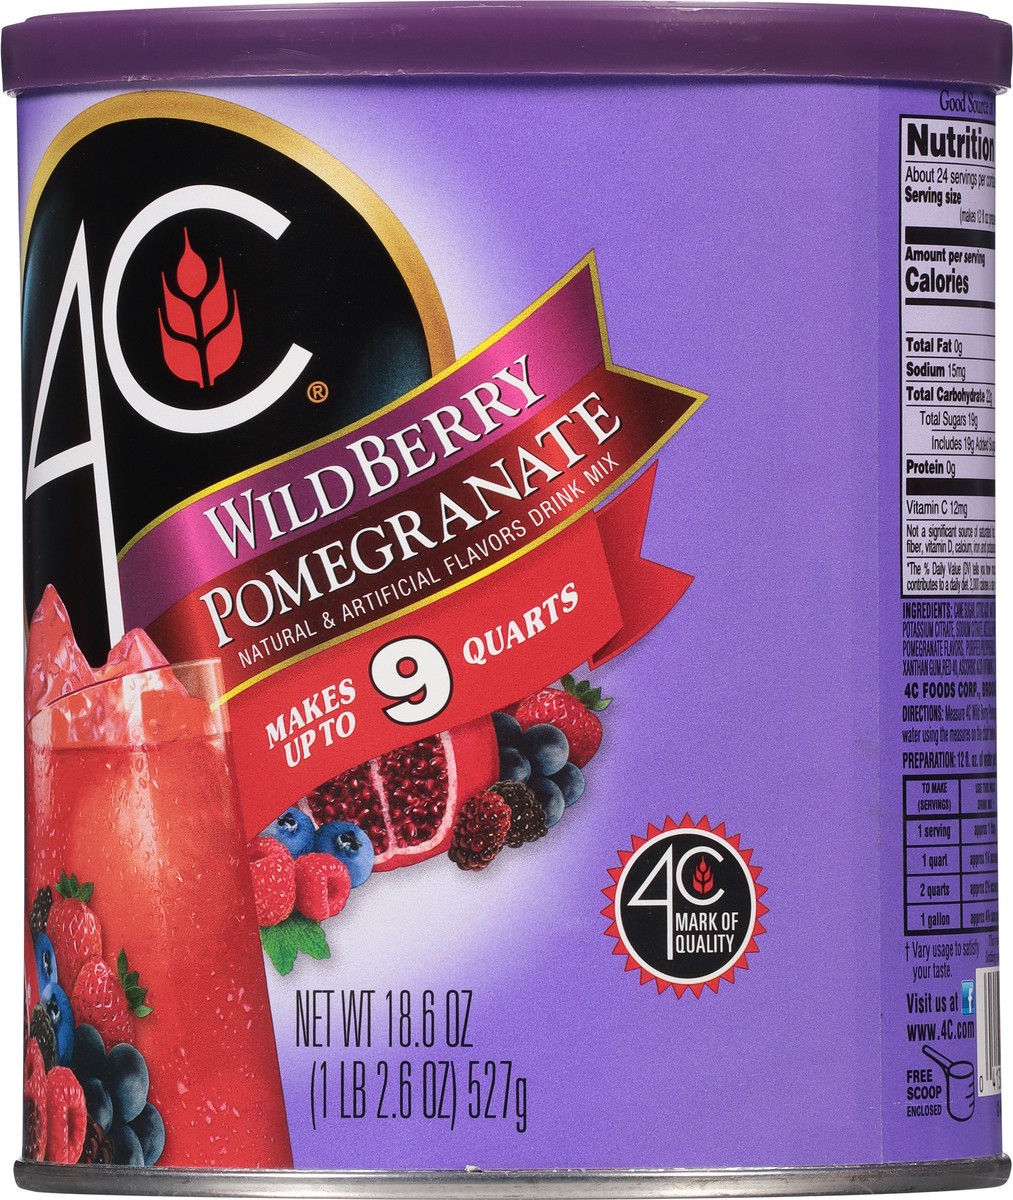 slide 5 of 9, 4C Wildberry/Pomegranate Drink Mix 18.6 oz, 18.6 oz